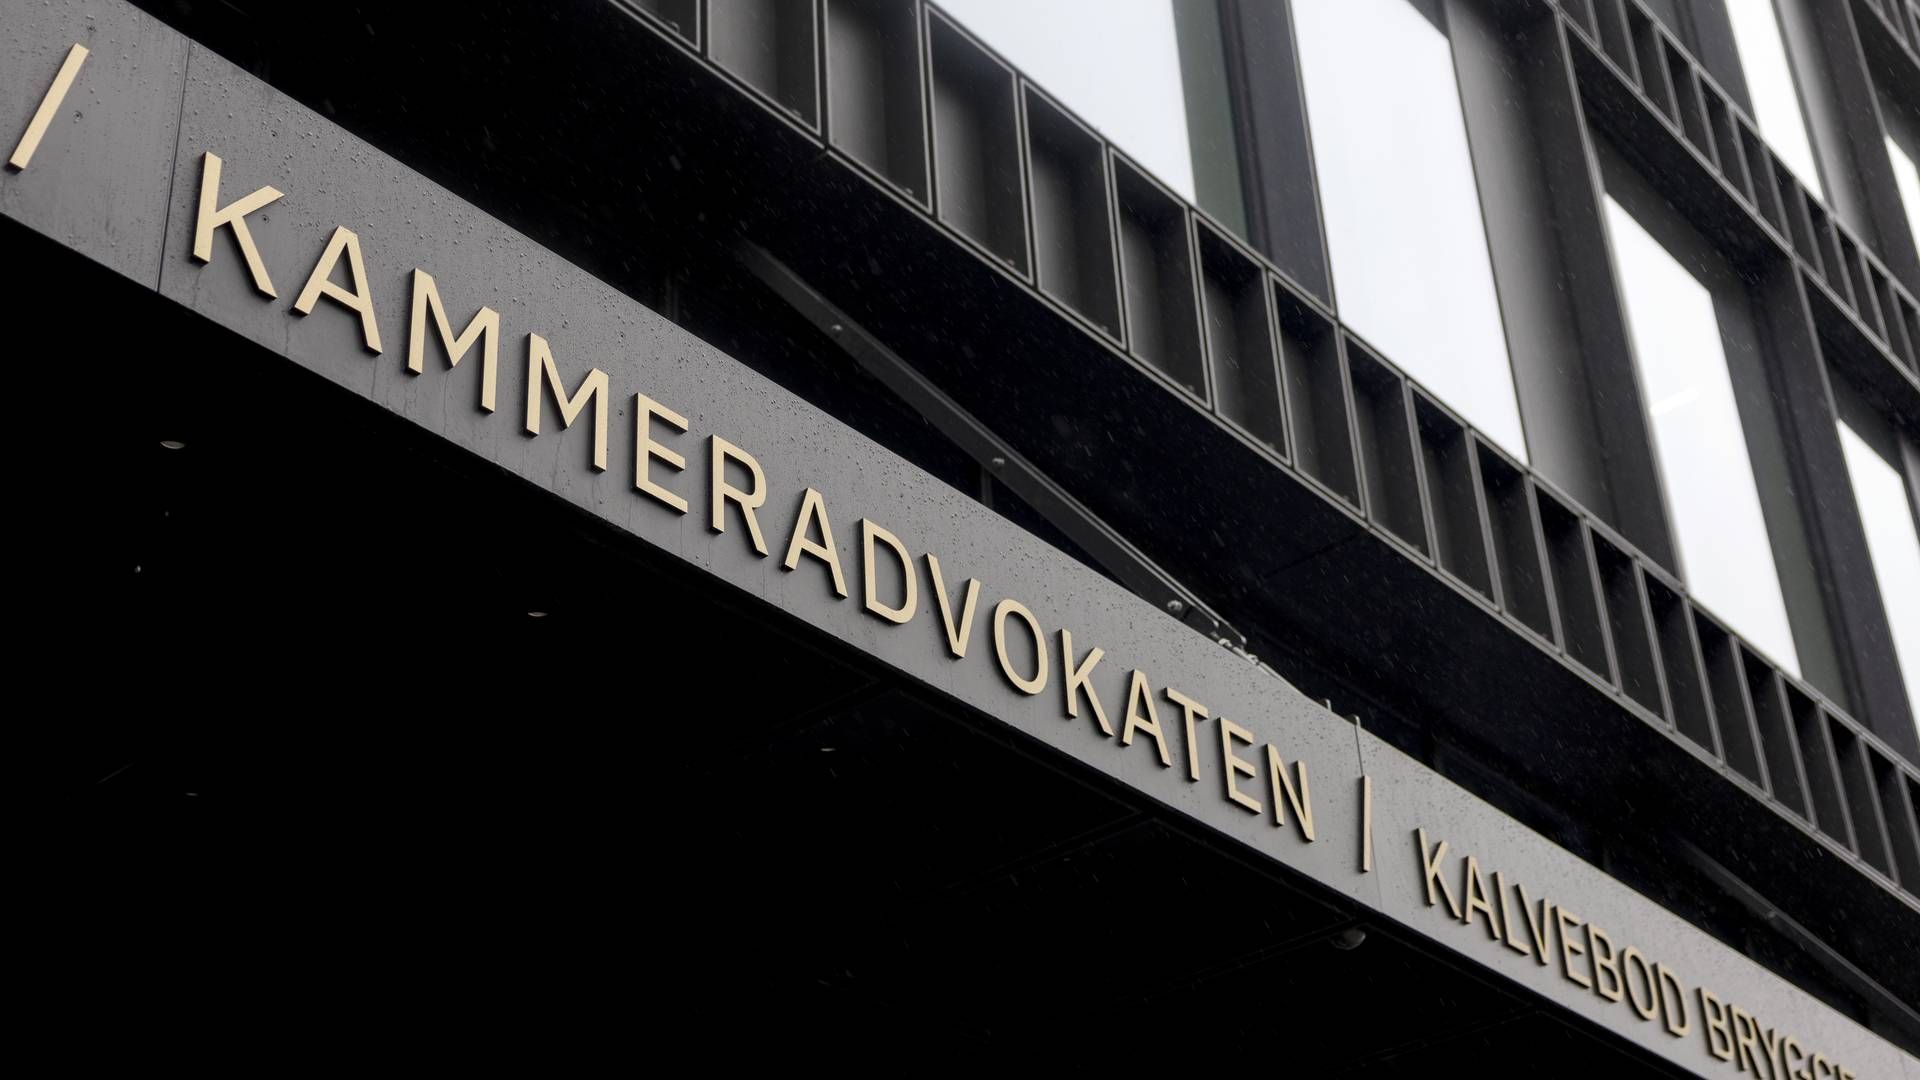 Kammeradvokaten når igen rekordomsætning fra staten., | Foto: Marcus Emil Christensen